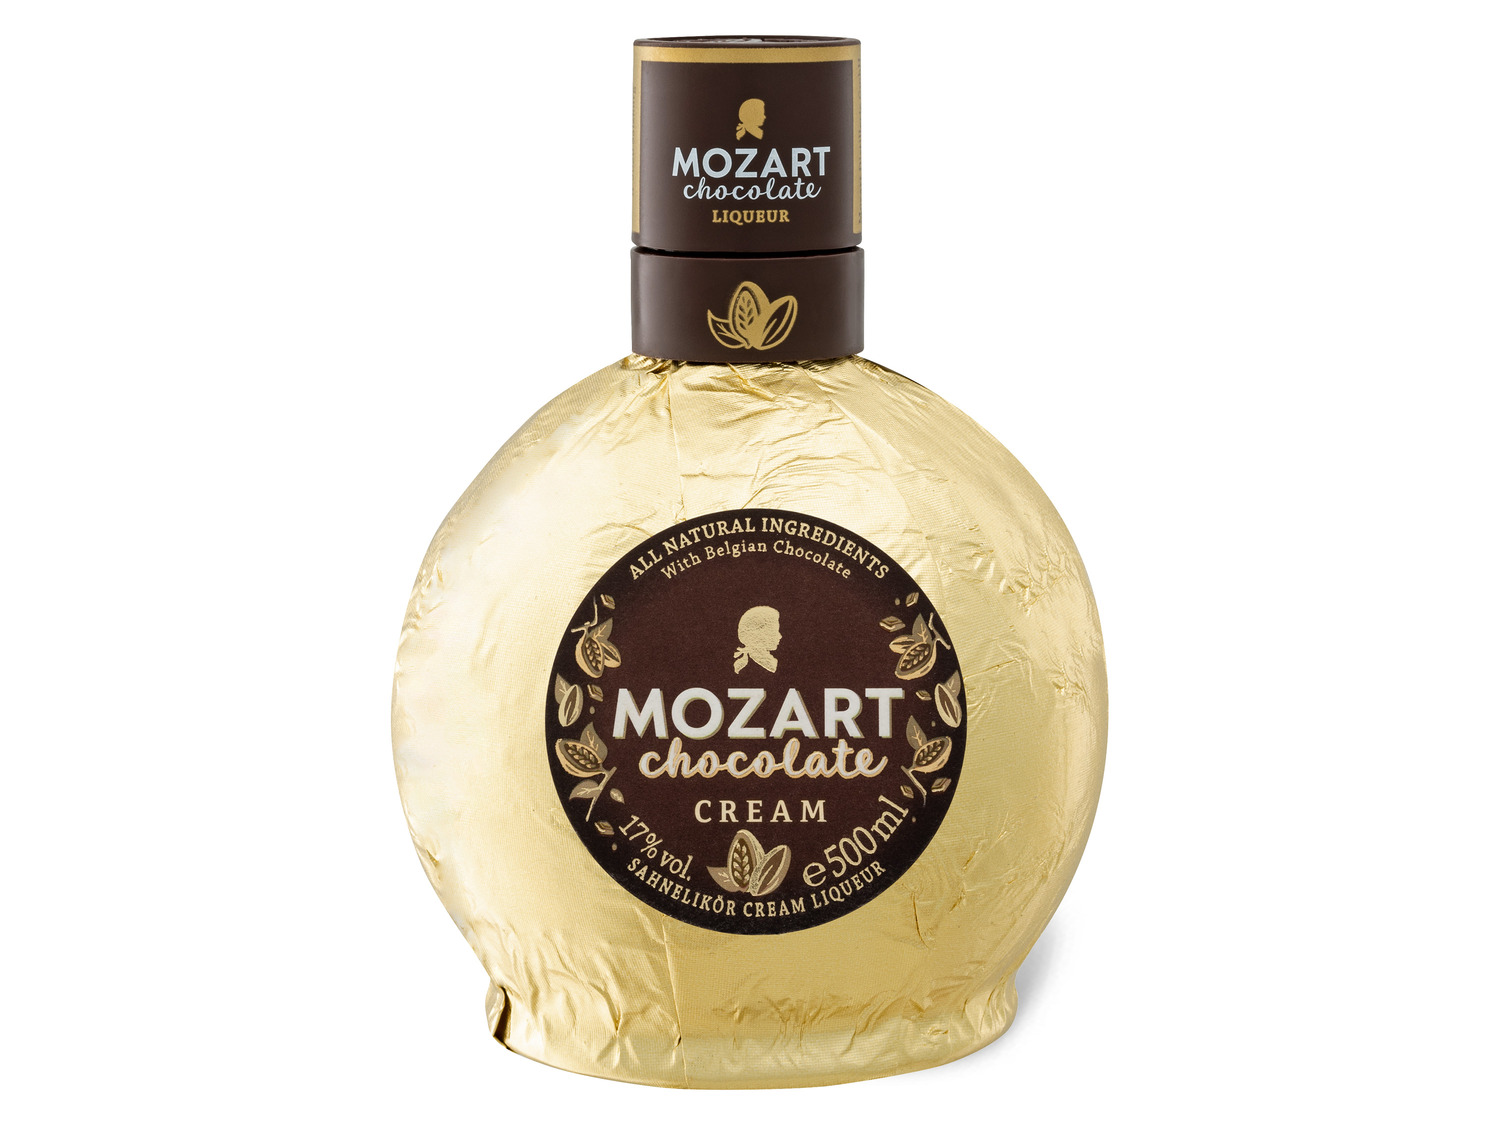 LIDL Chocolate Liqueur Mozart Gold Cream Vol 17% |